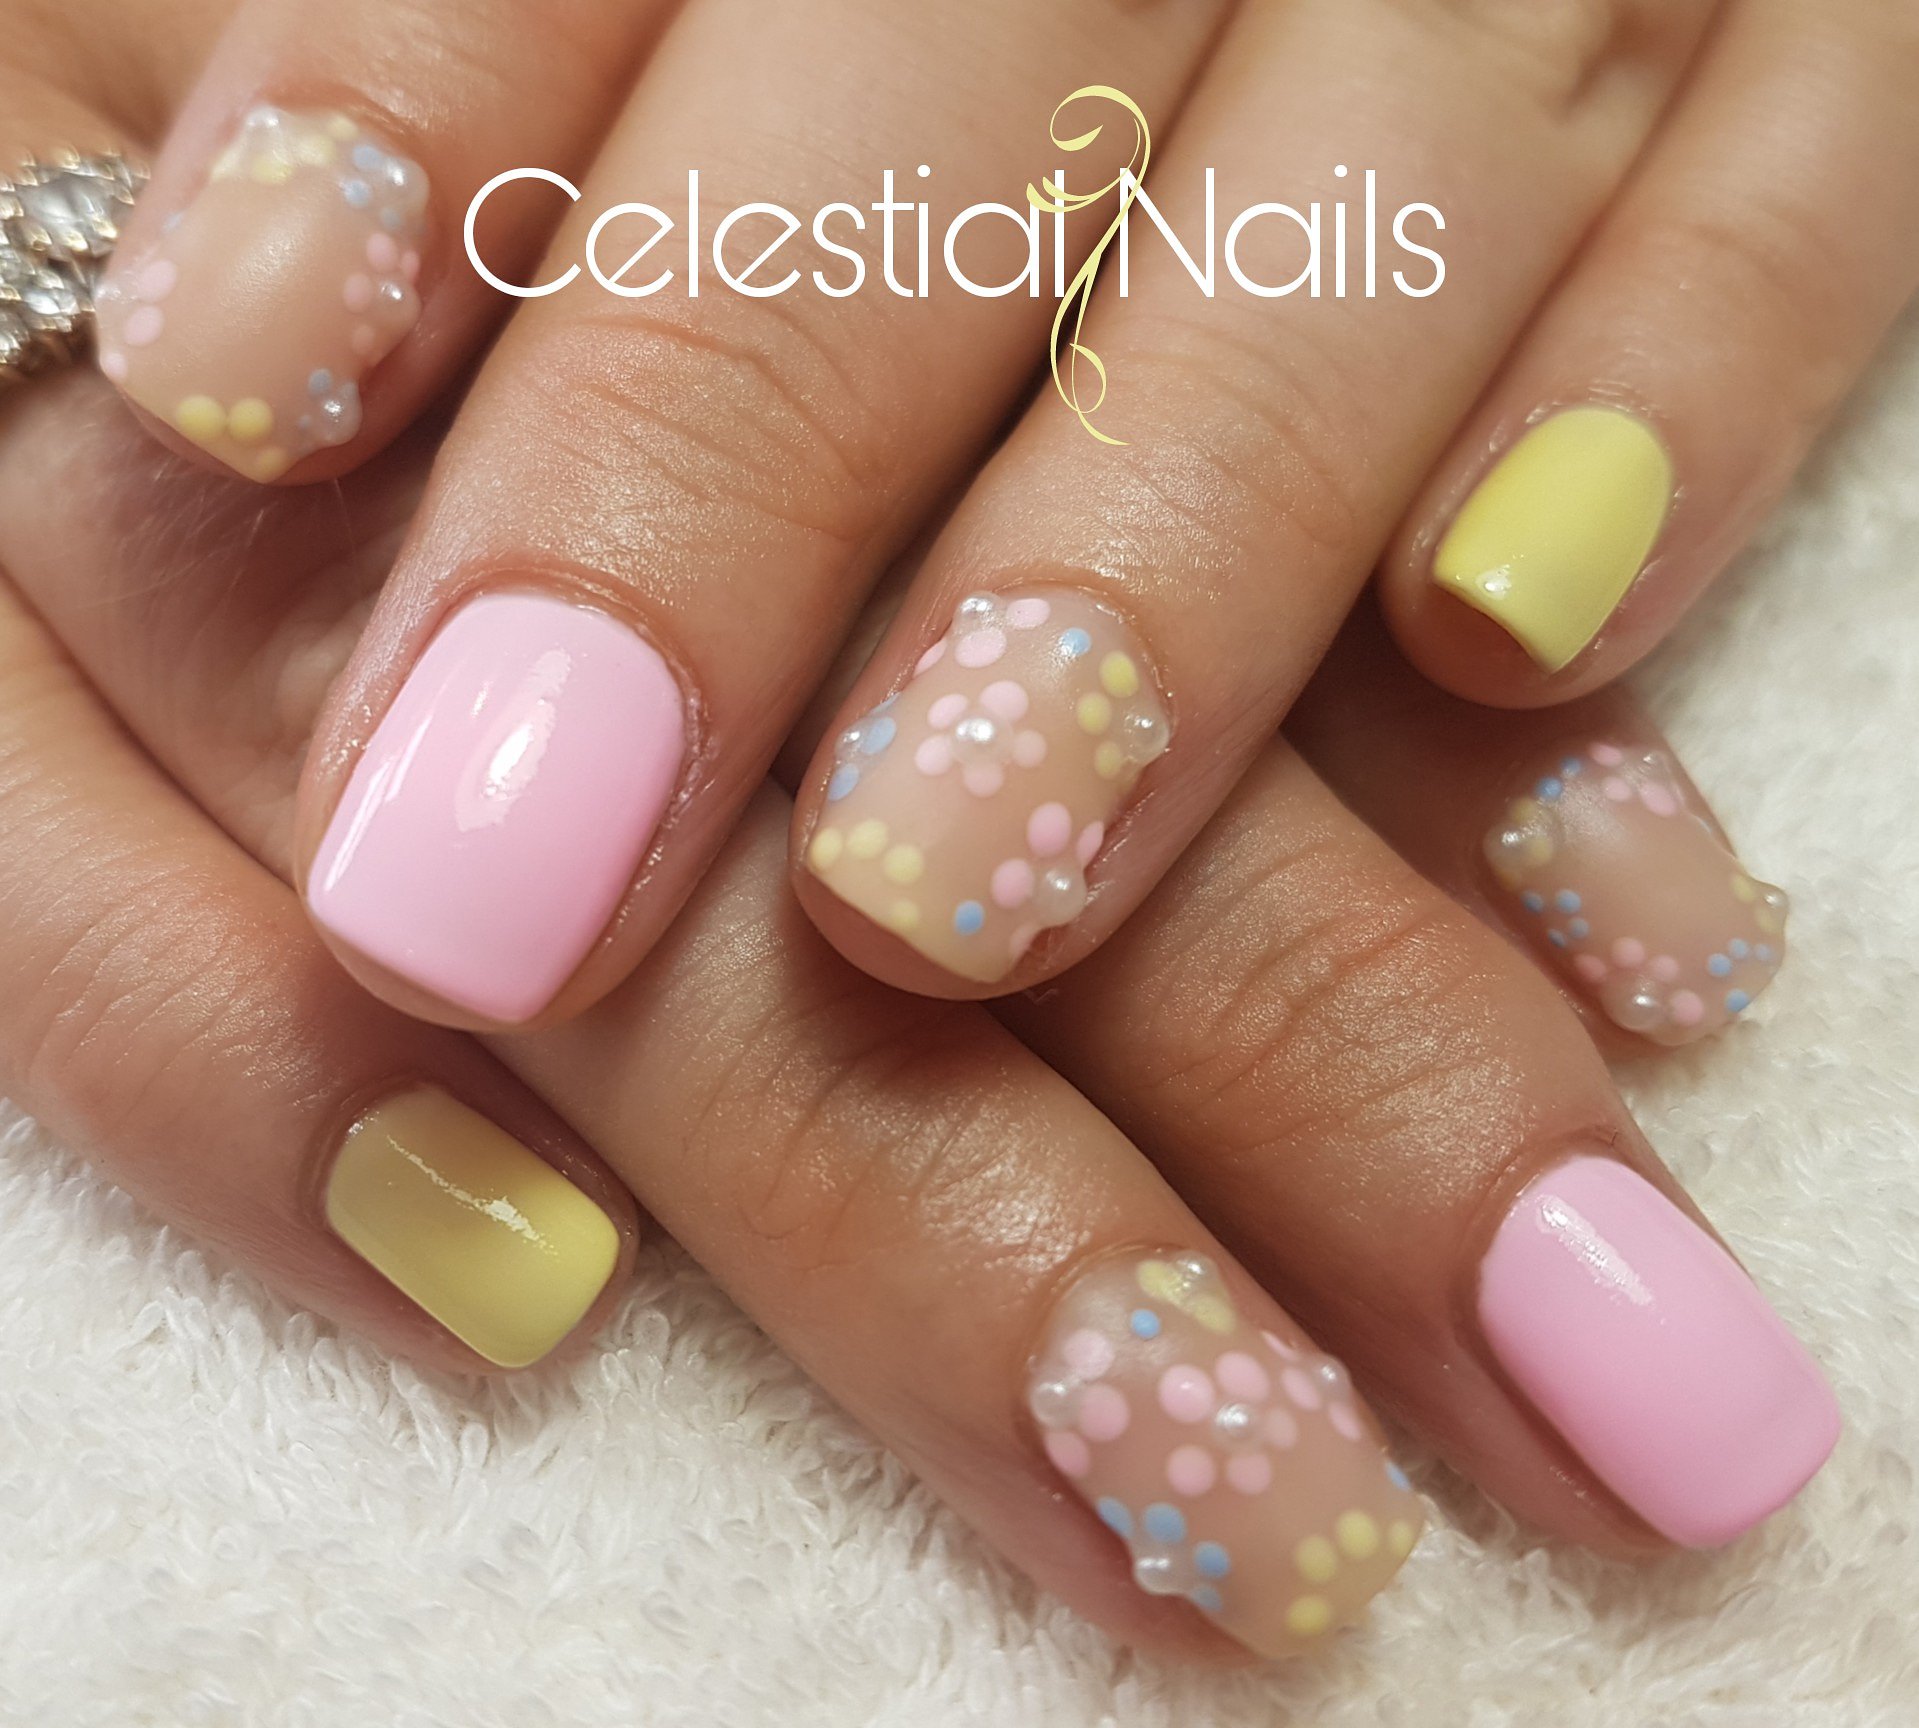 Julie on Twitter: "Pretty summer colours. Gel polish on natural nails with pearl summer flowers 💗💅 #celestialnails #nofiltter #nofiltterneeded #summer #flowers #pearl #gelpolish #yellow #pink #blue #nailtech #nailartist #picsart ...